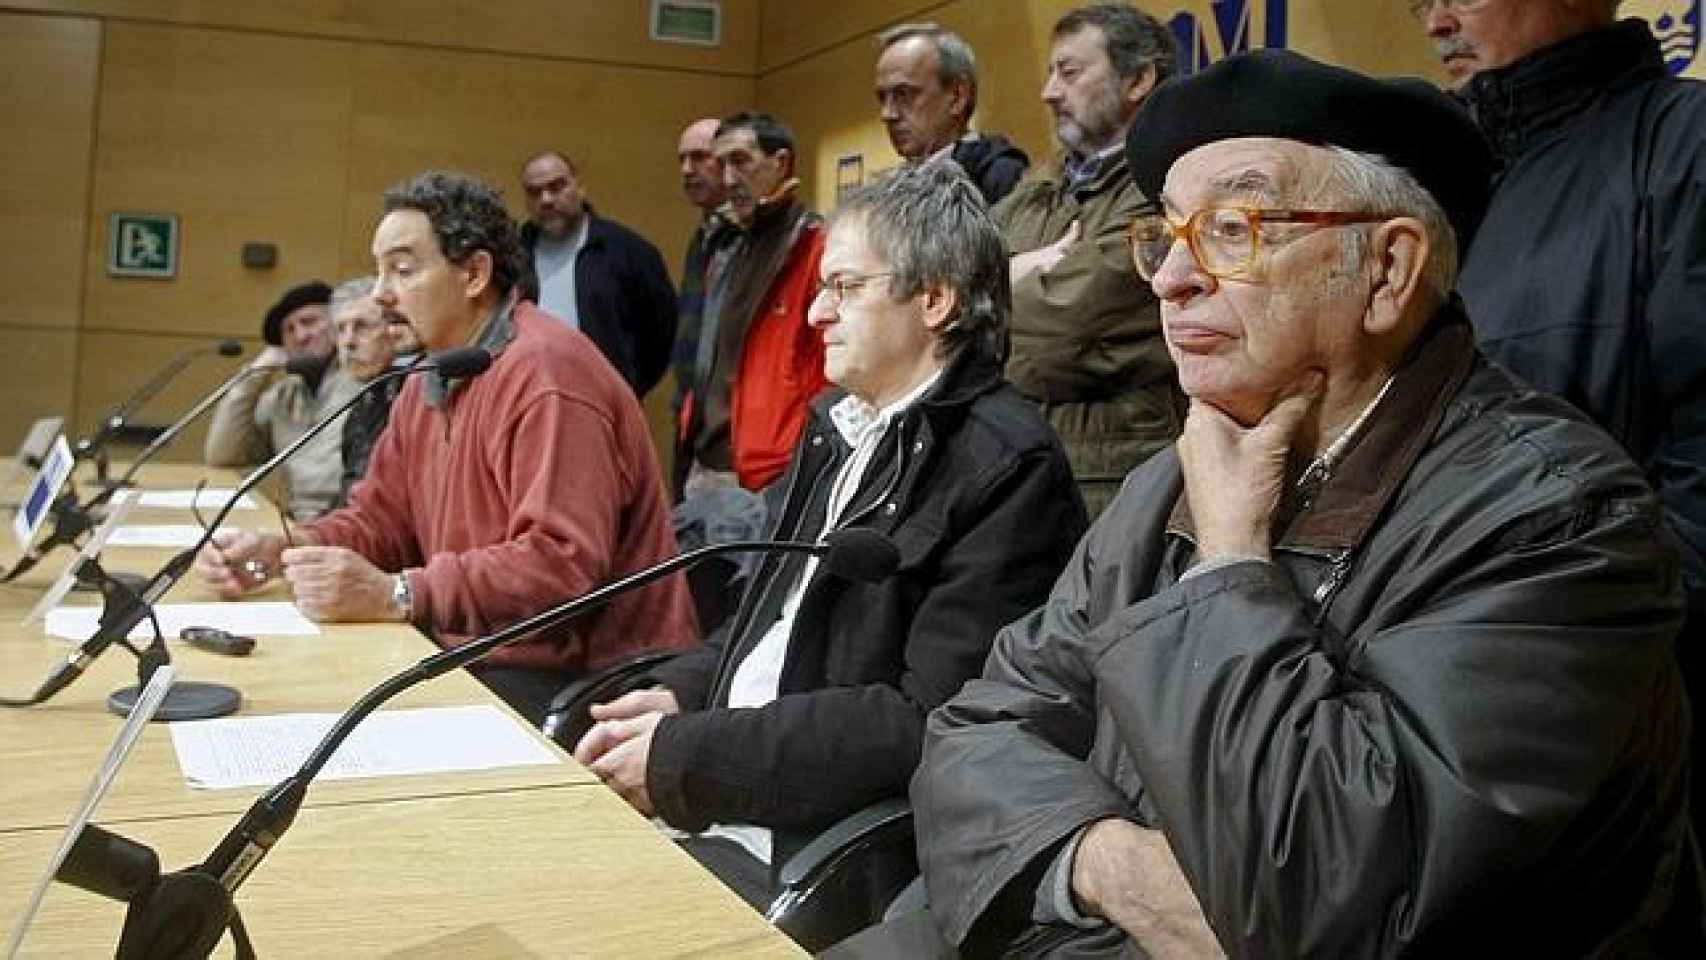 Uno de los fundadores de ETA, Jos Luis lvarez Enparantza, alias 'Txillardegi', a la derecha de la imagen. / EFE